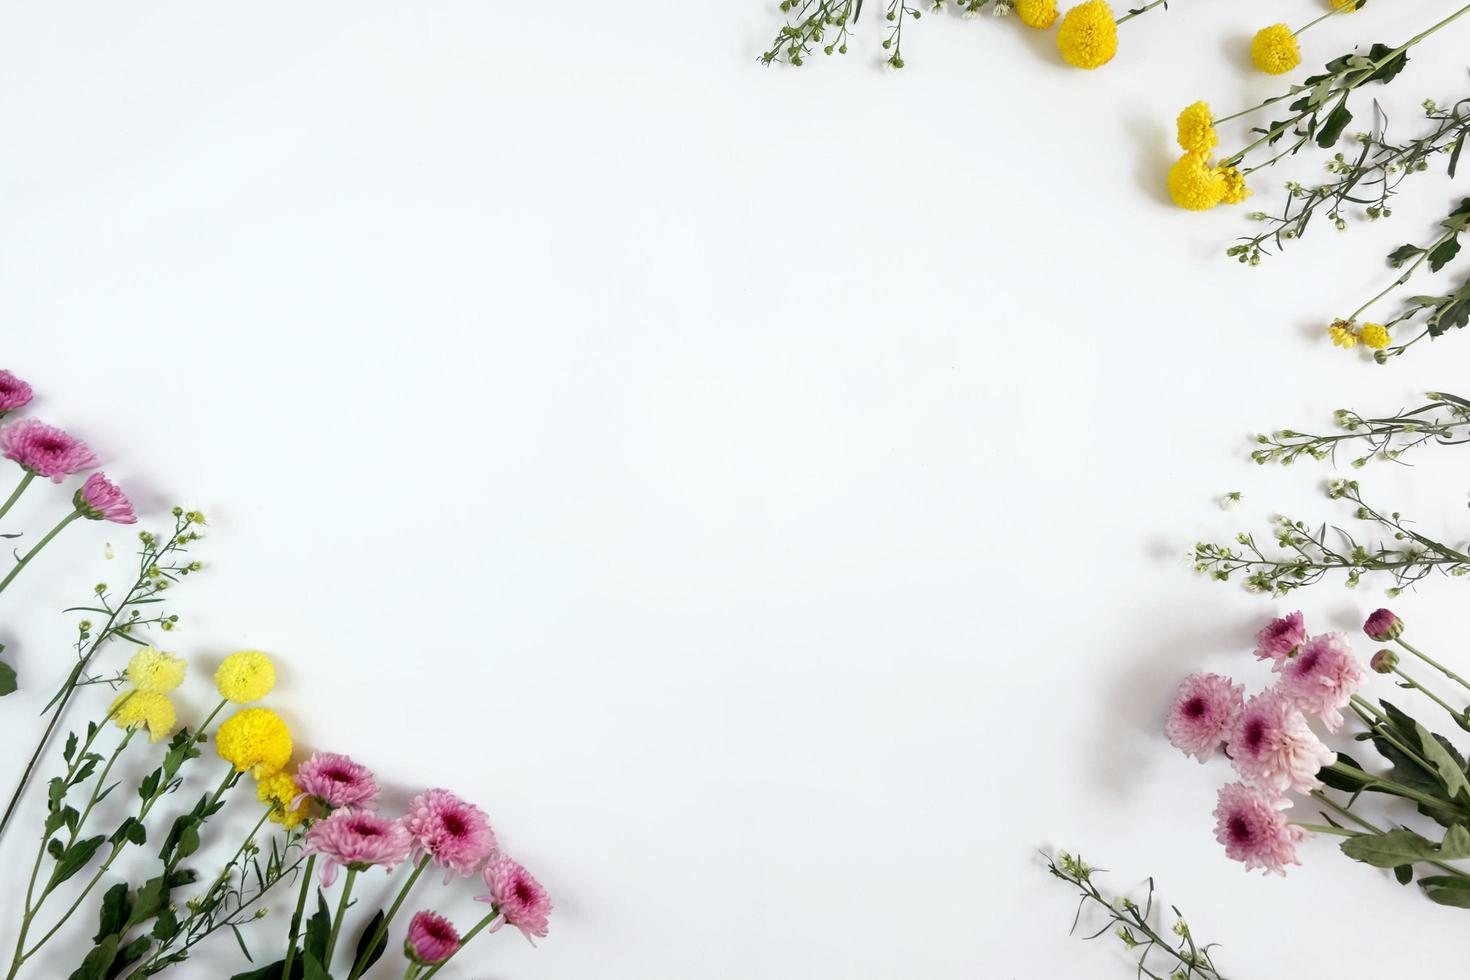 moldura de arranjo floral em fundo branco foto